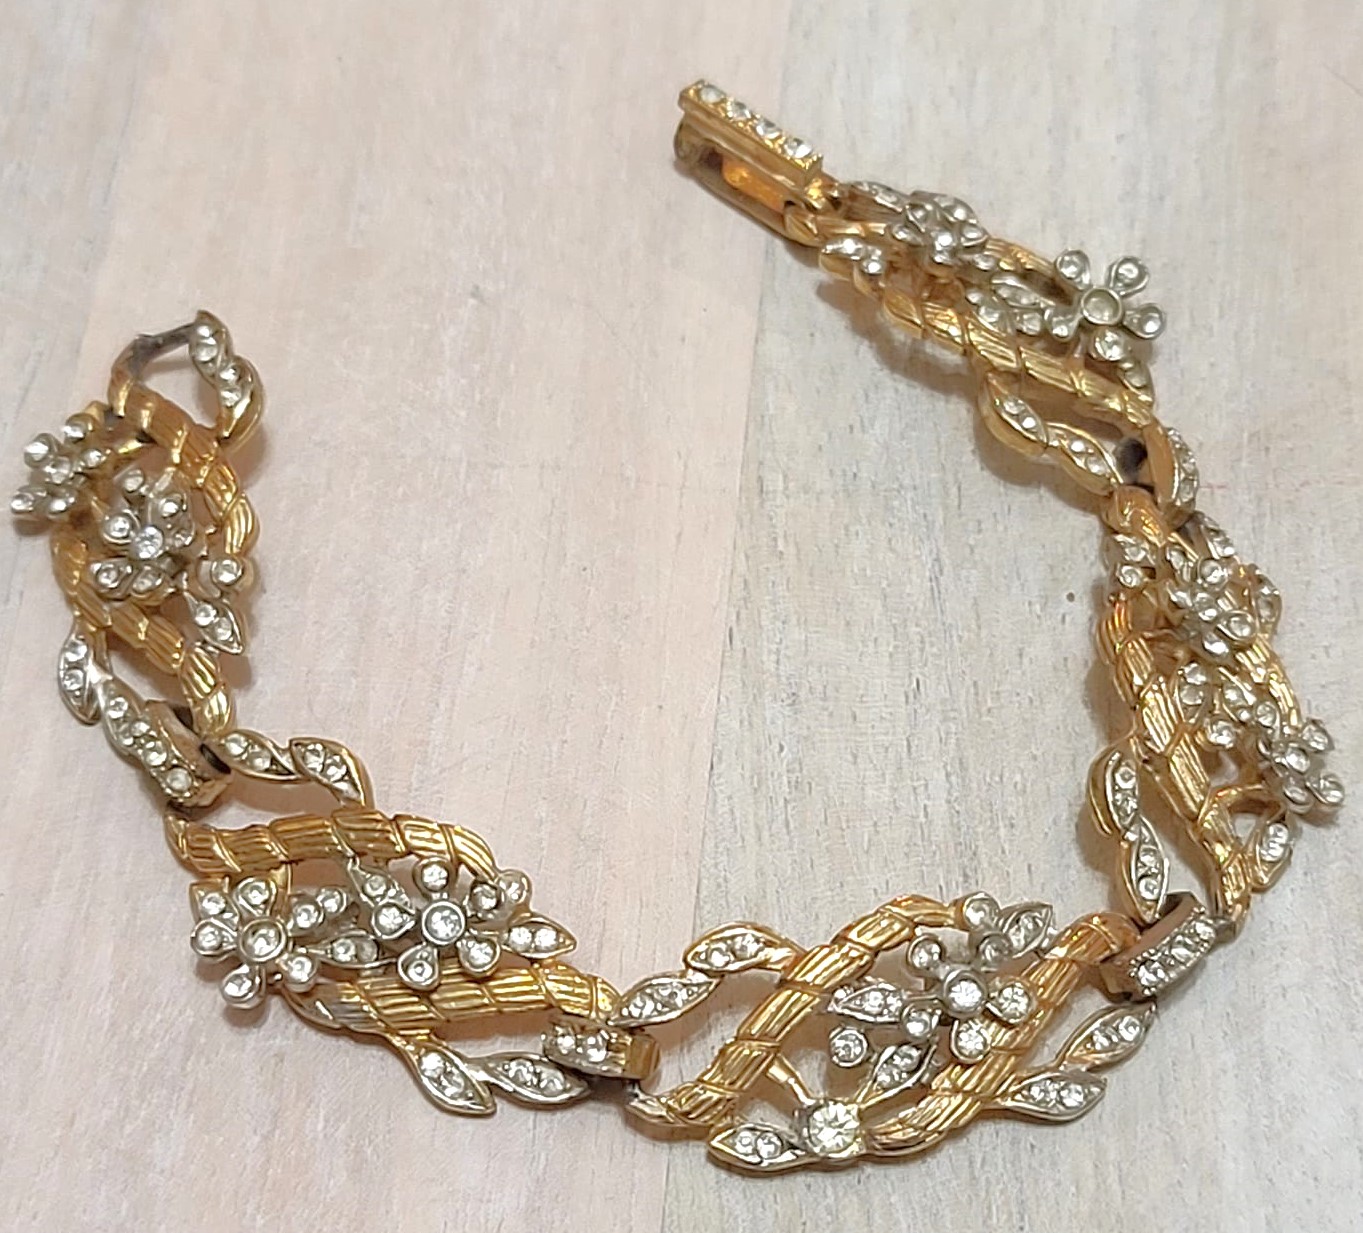 Ornate rhinestone bracelet, vintage with encrusted rhinestones, goldtone